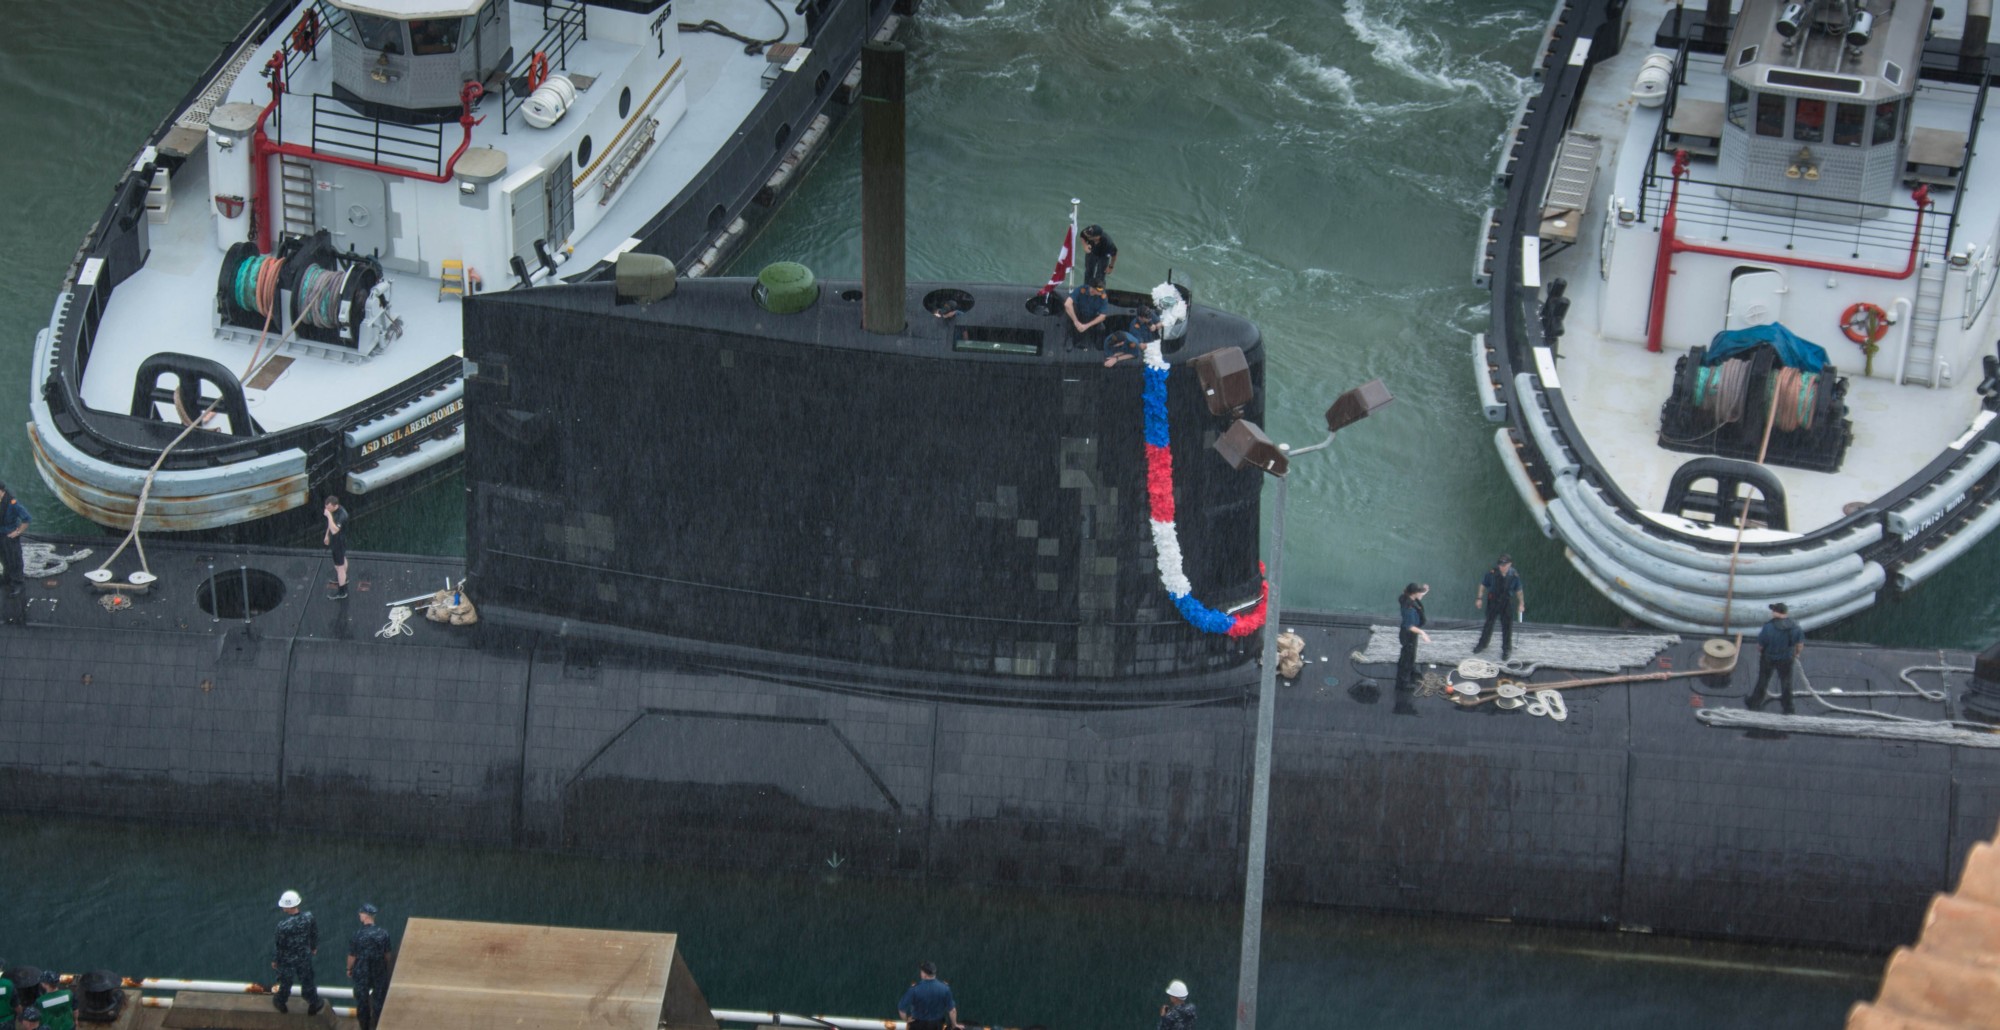 ssk-876 hmcs victoria upholder class attack submarine hunter killer ncsm royal canadian navy 16